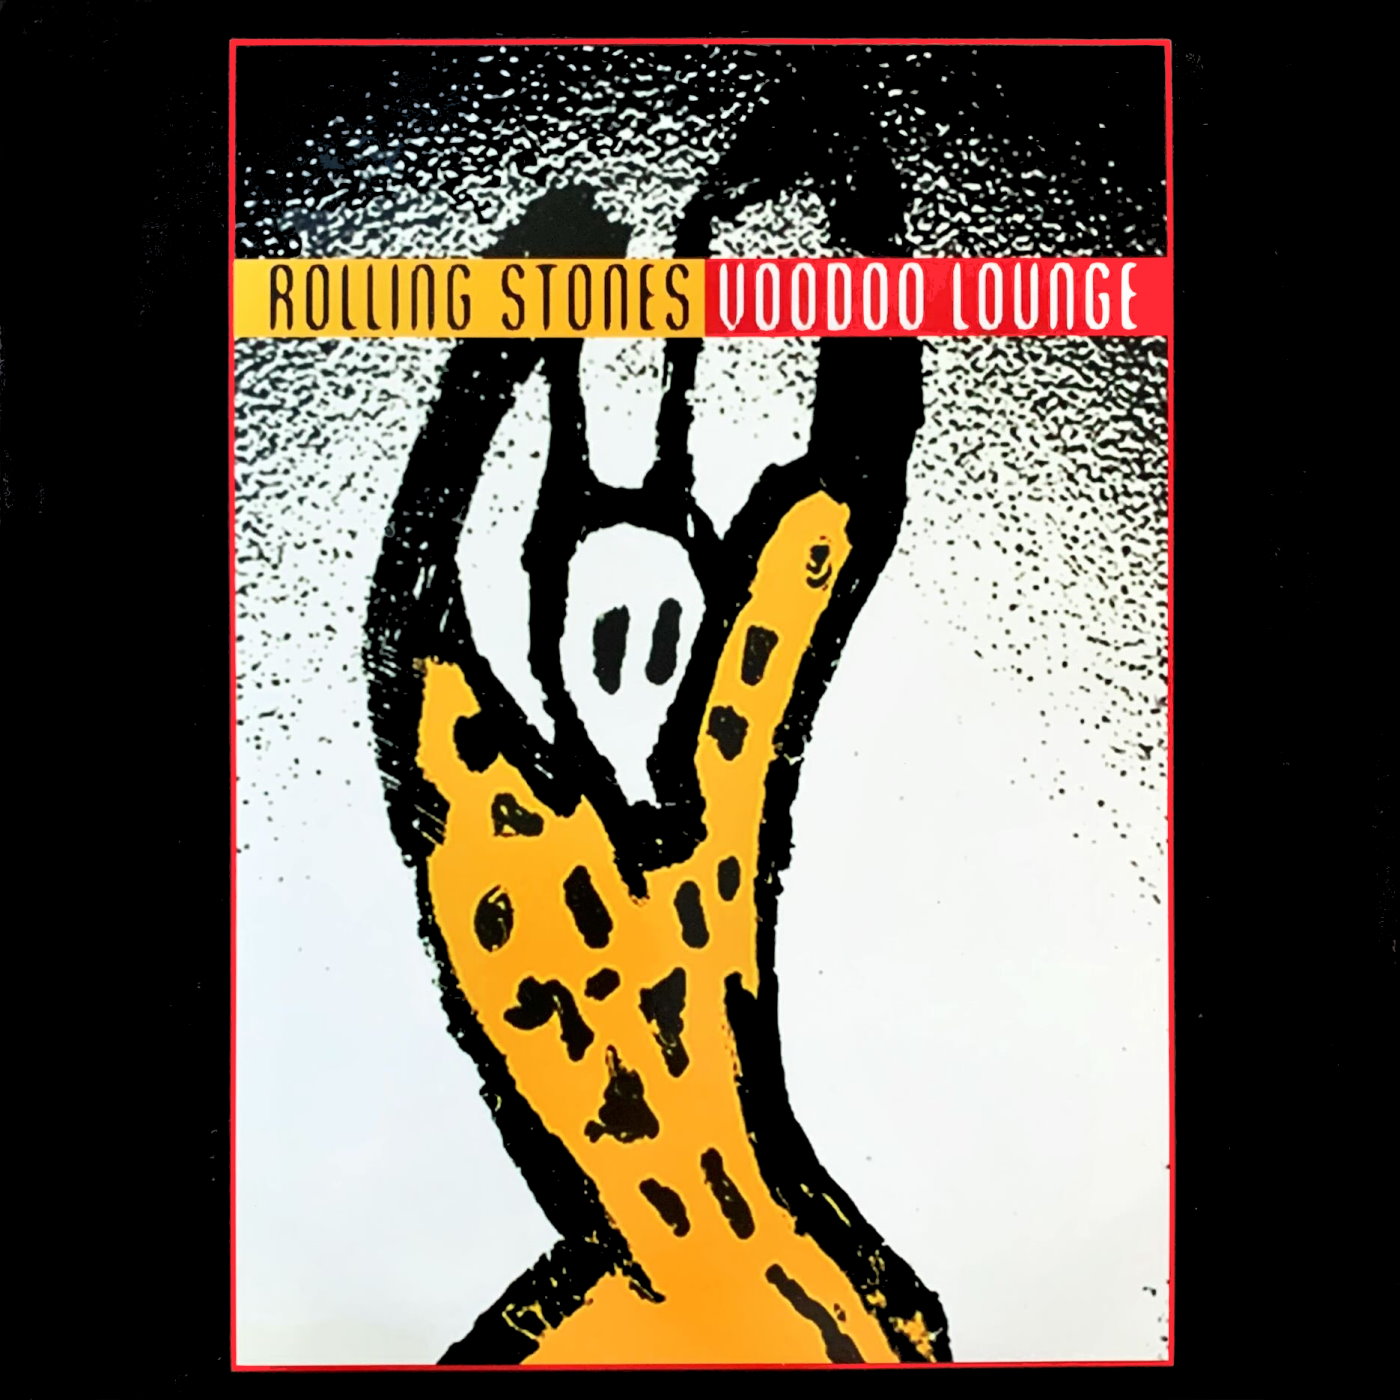 Cover - Rolling  Stones - Voodoo Lounge.jpg